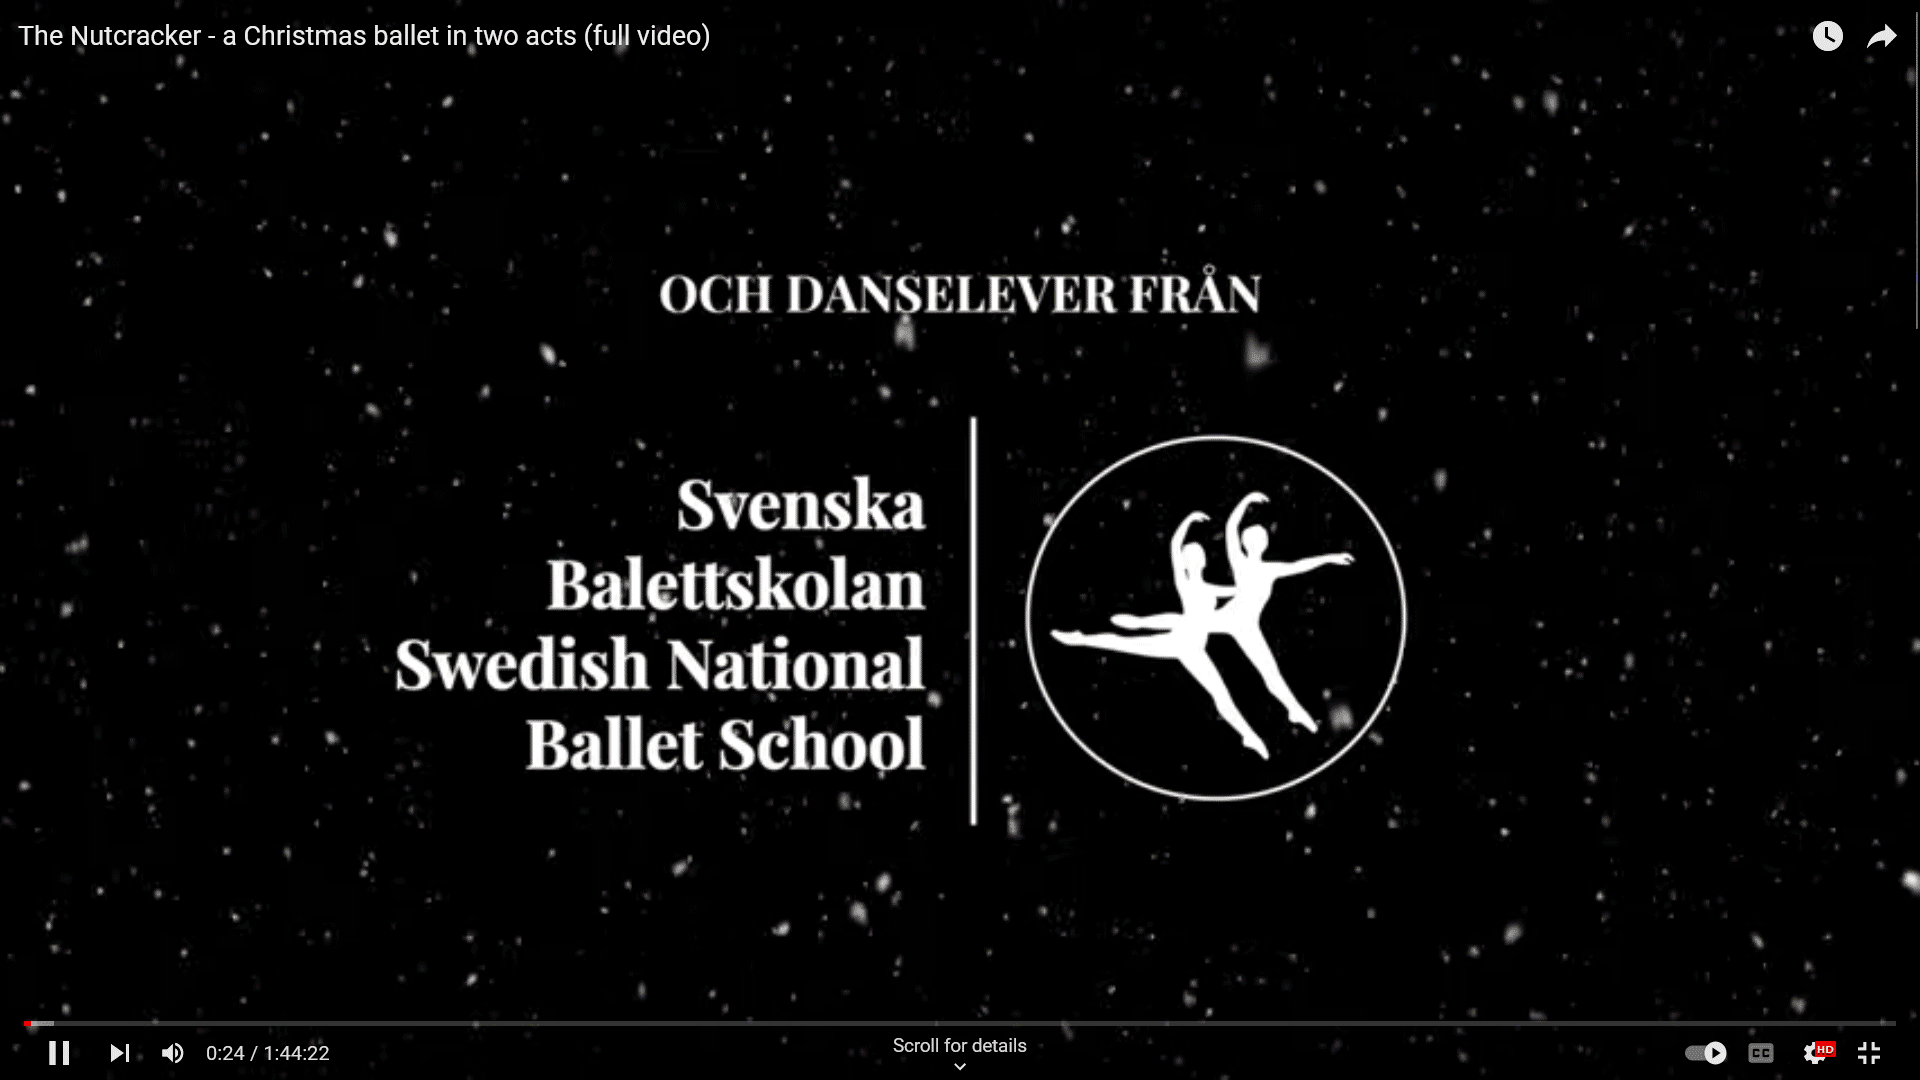 Swedish National Ballet School,